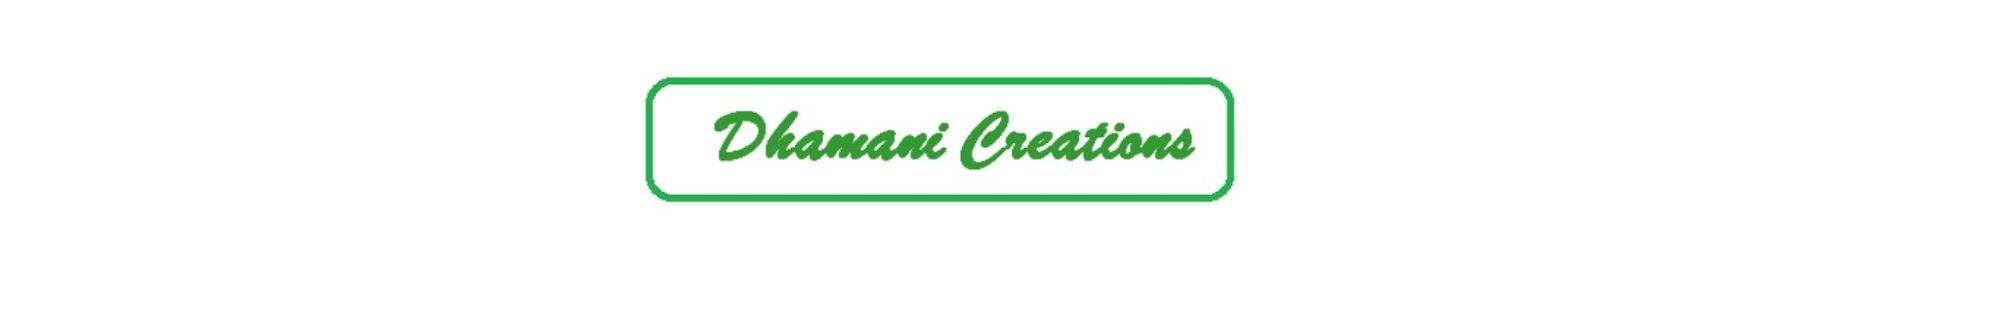 Dhamani Creations